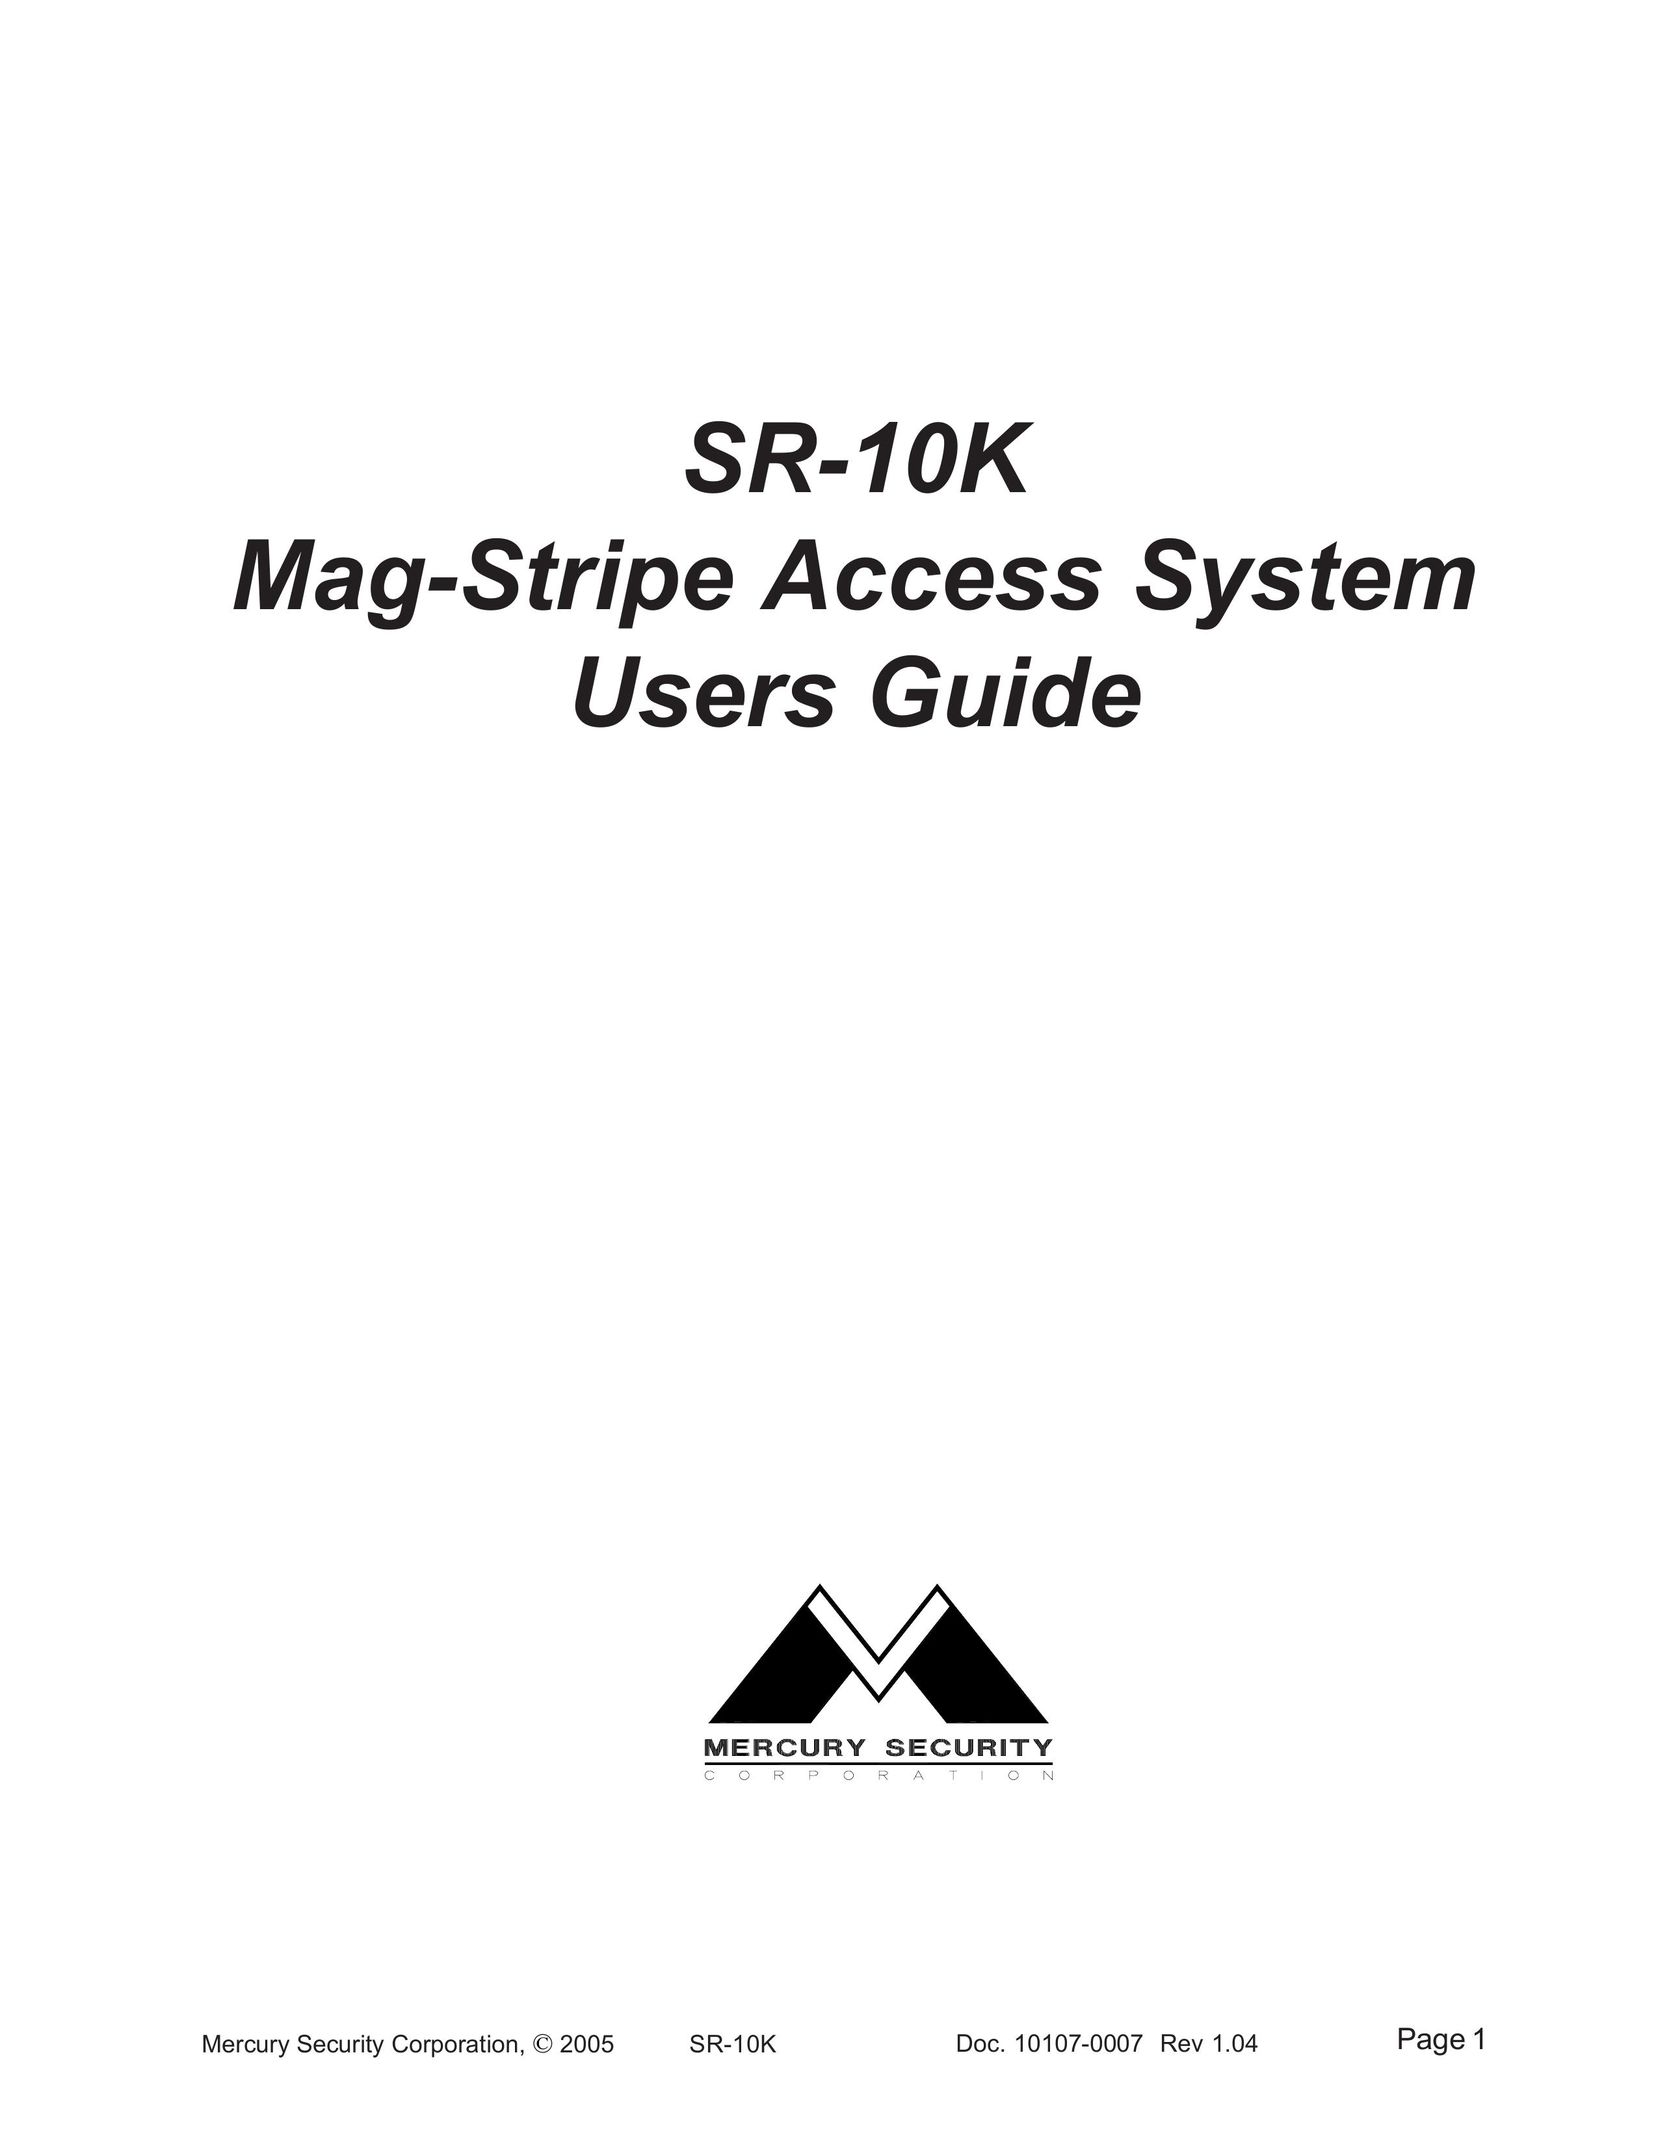 Mercury SR-10K Home Security System User Manual